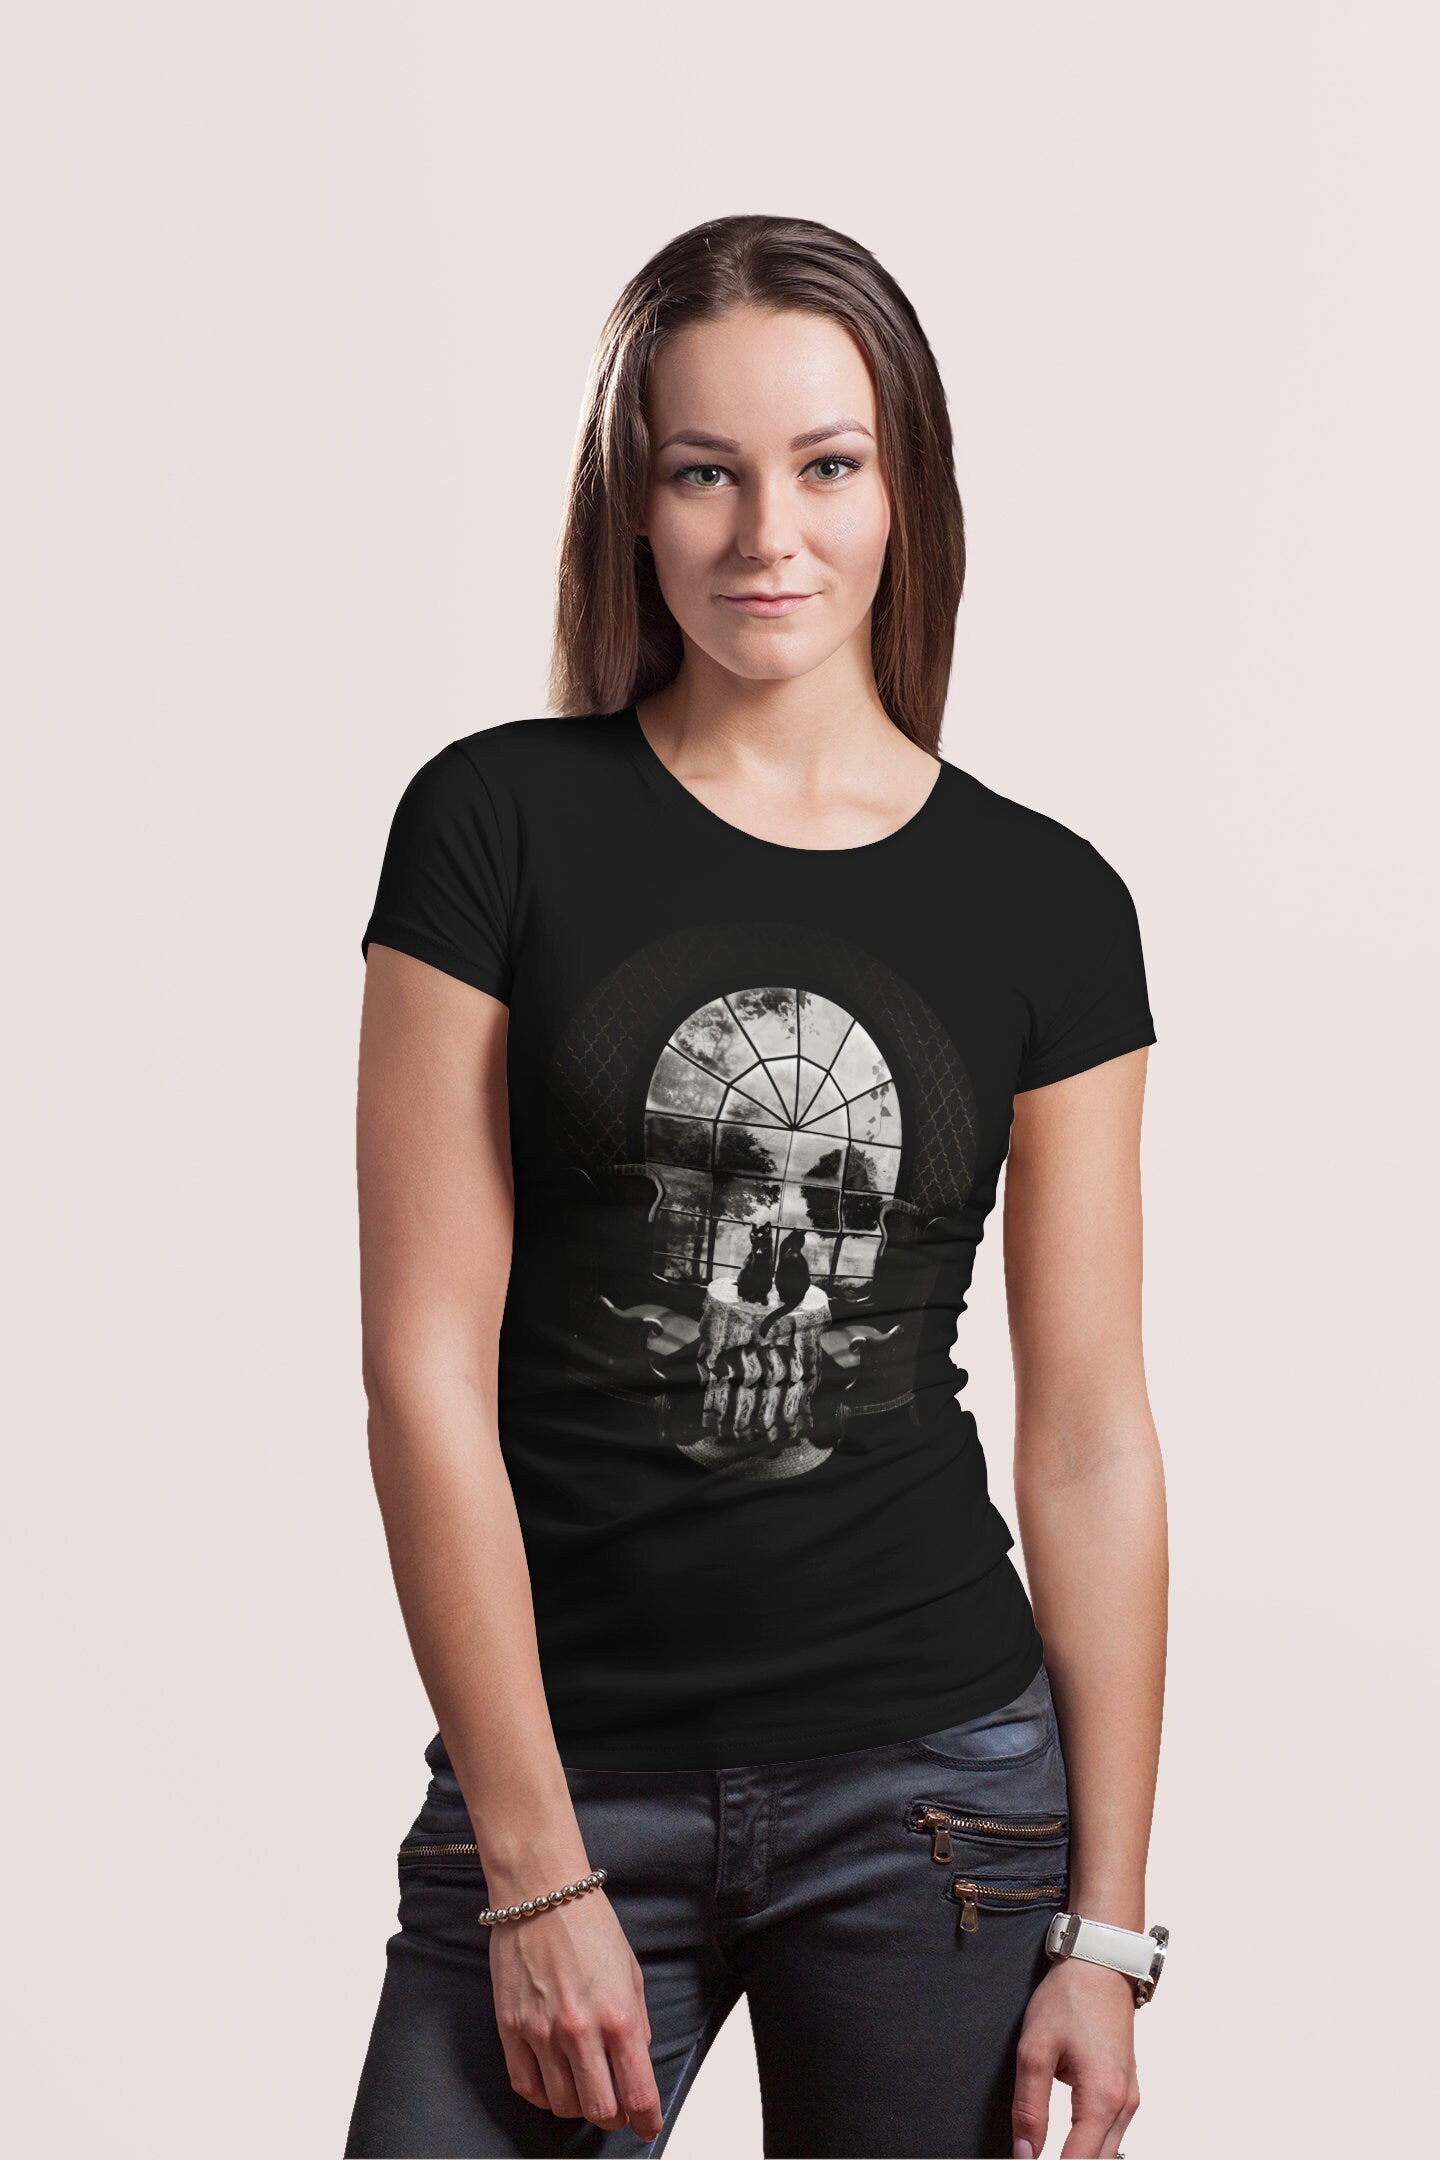 Skull Print Womens T shirt, Skull Illusion Art Tshirt Gift For Her, Floral Sugar Skull Print Boho Graphic Tee, Gothic Bella Canvas T-Shirt